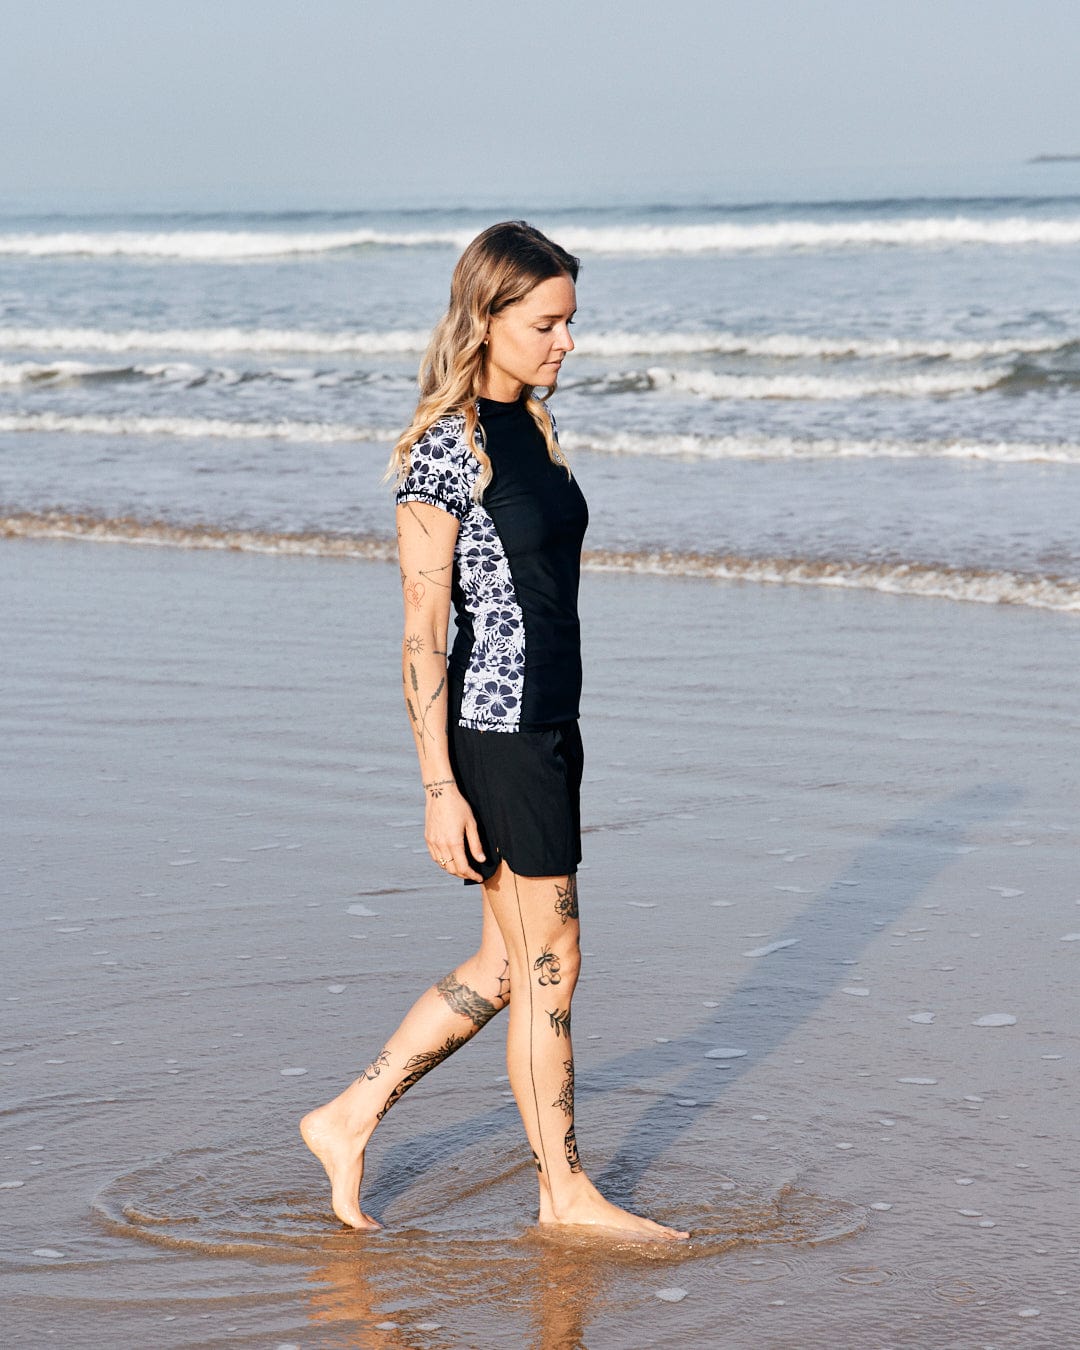 Woman with tattoos walking on a beach, shallow water around her feet, wearing a Saltrock Amphibian - Womens Boardshort - Black.